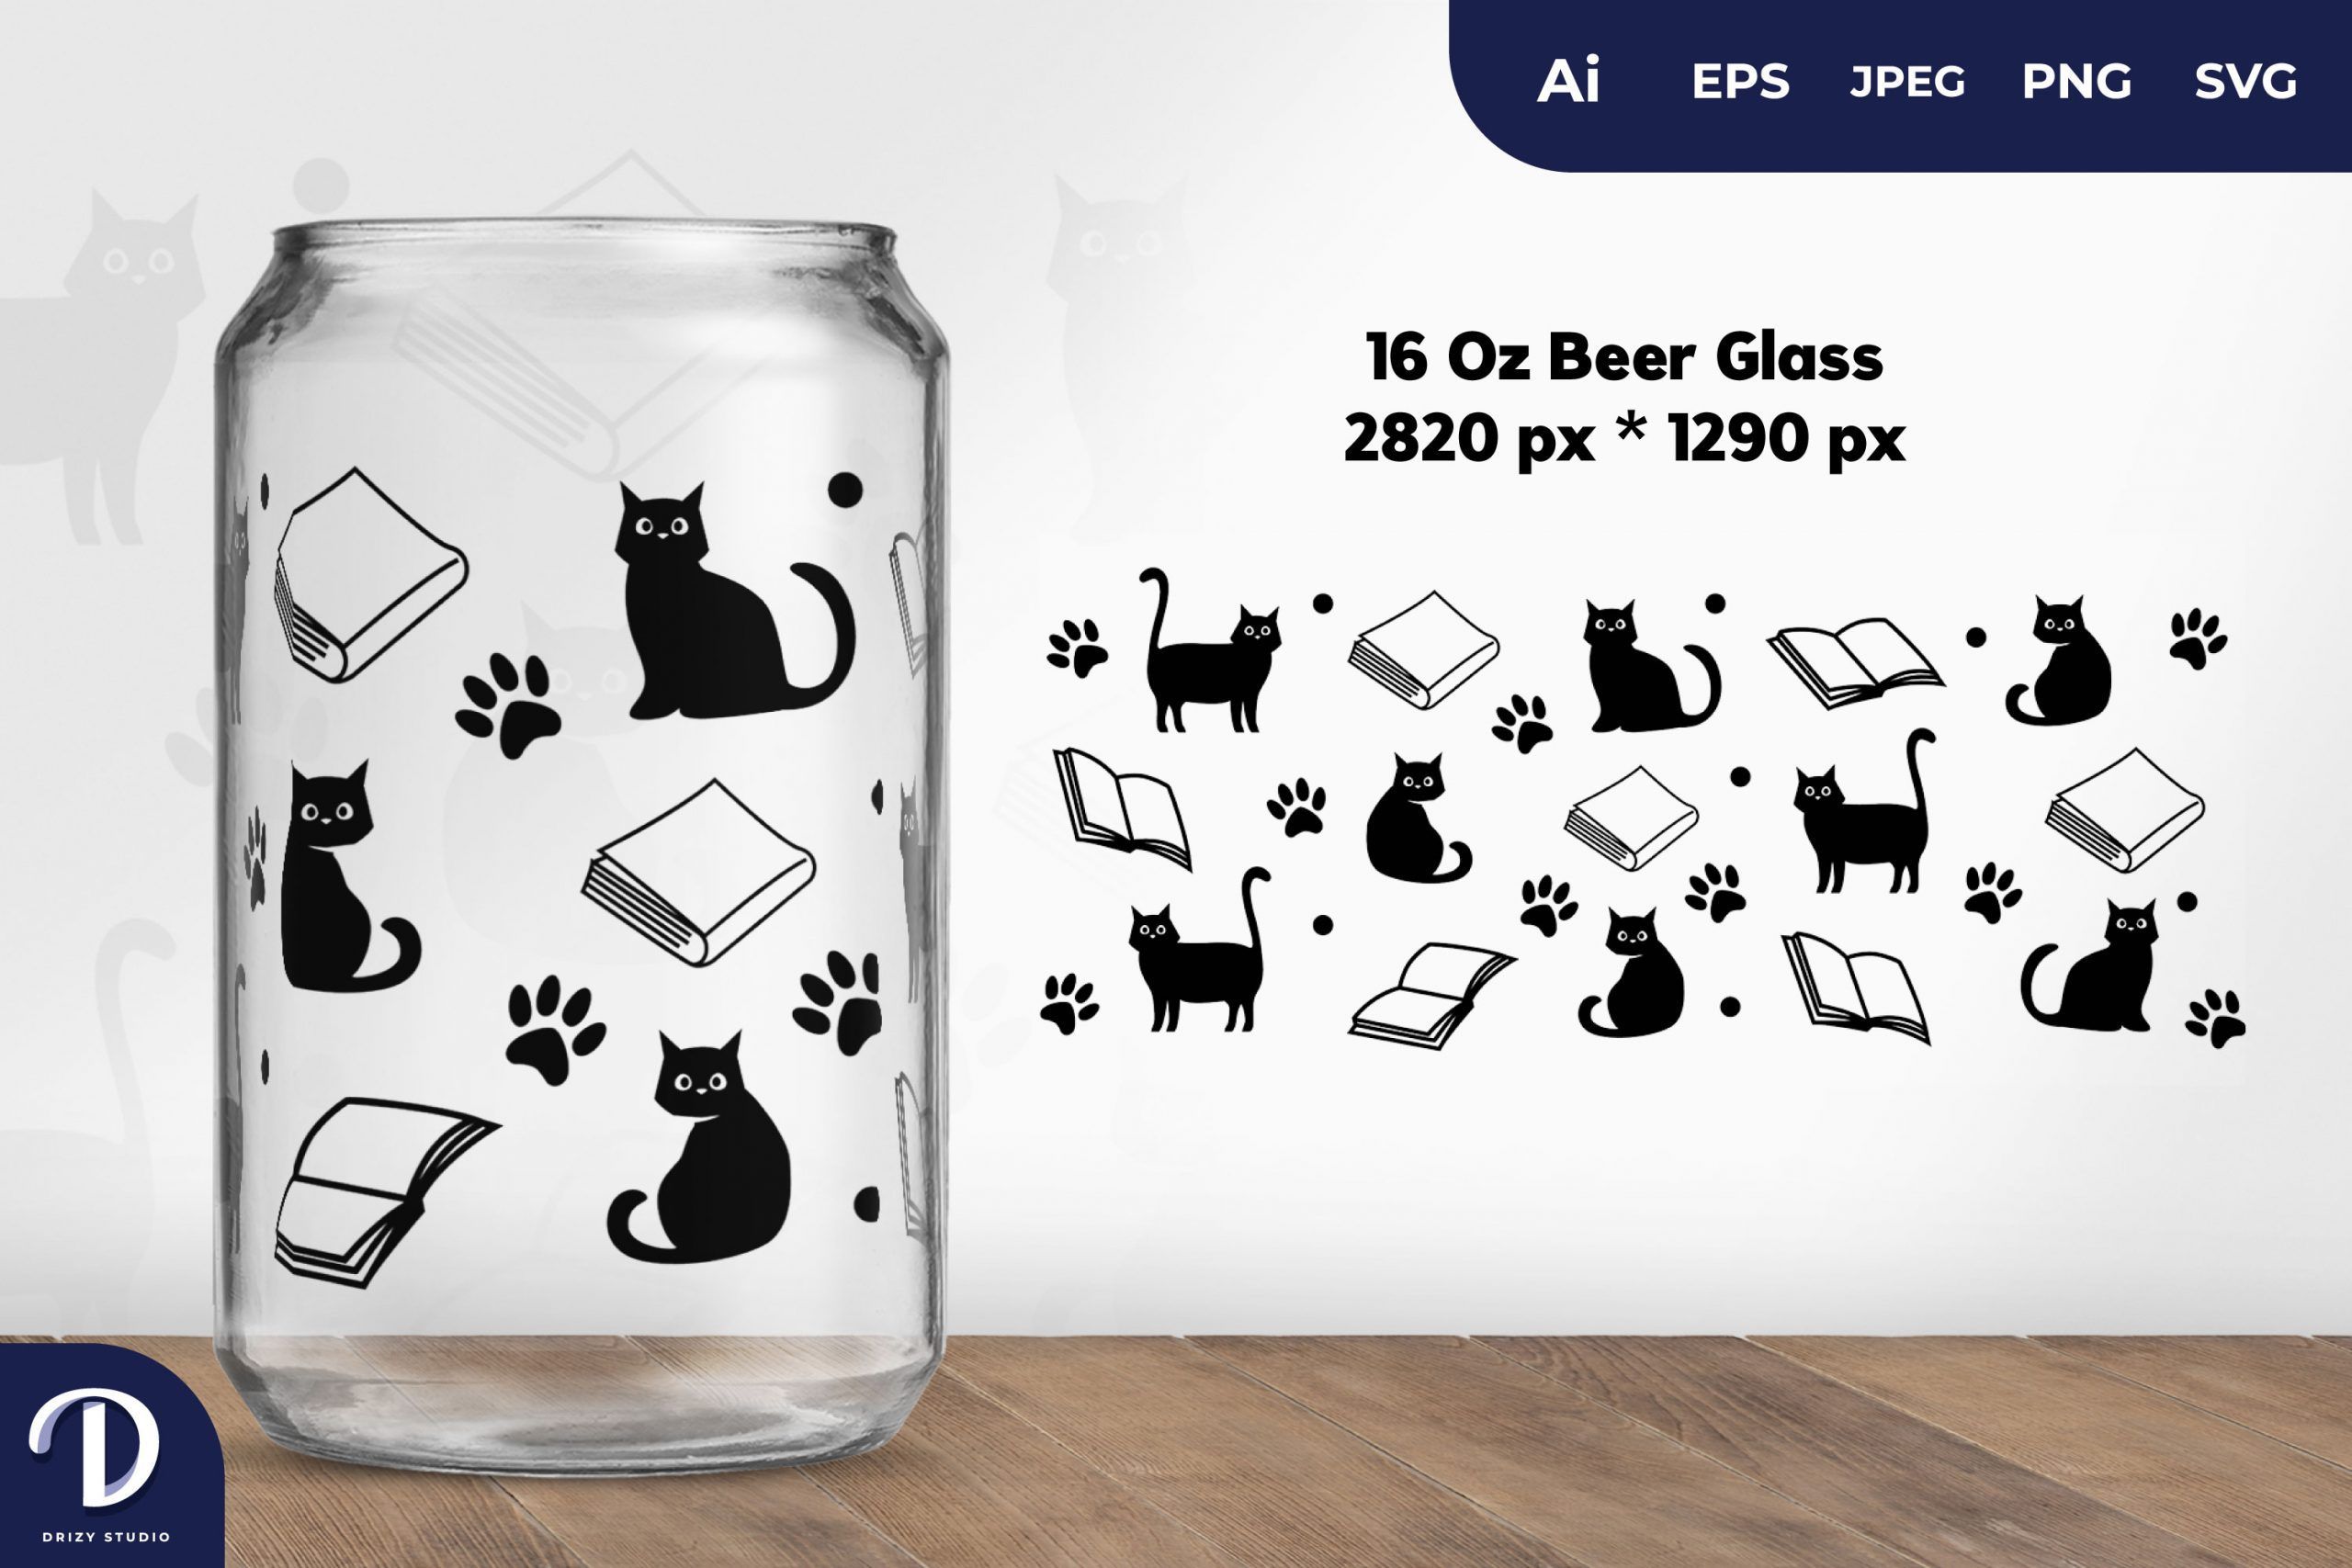 Bundle 6 Cat Libbey Beer Glass Can Wrap SVG 16oz & 20oz